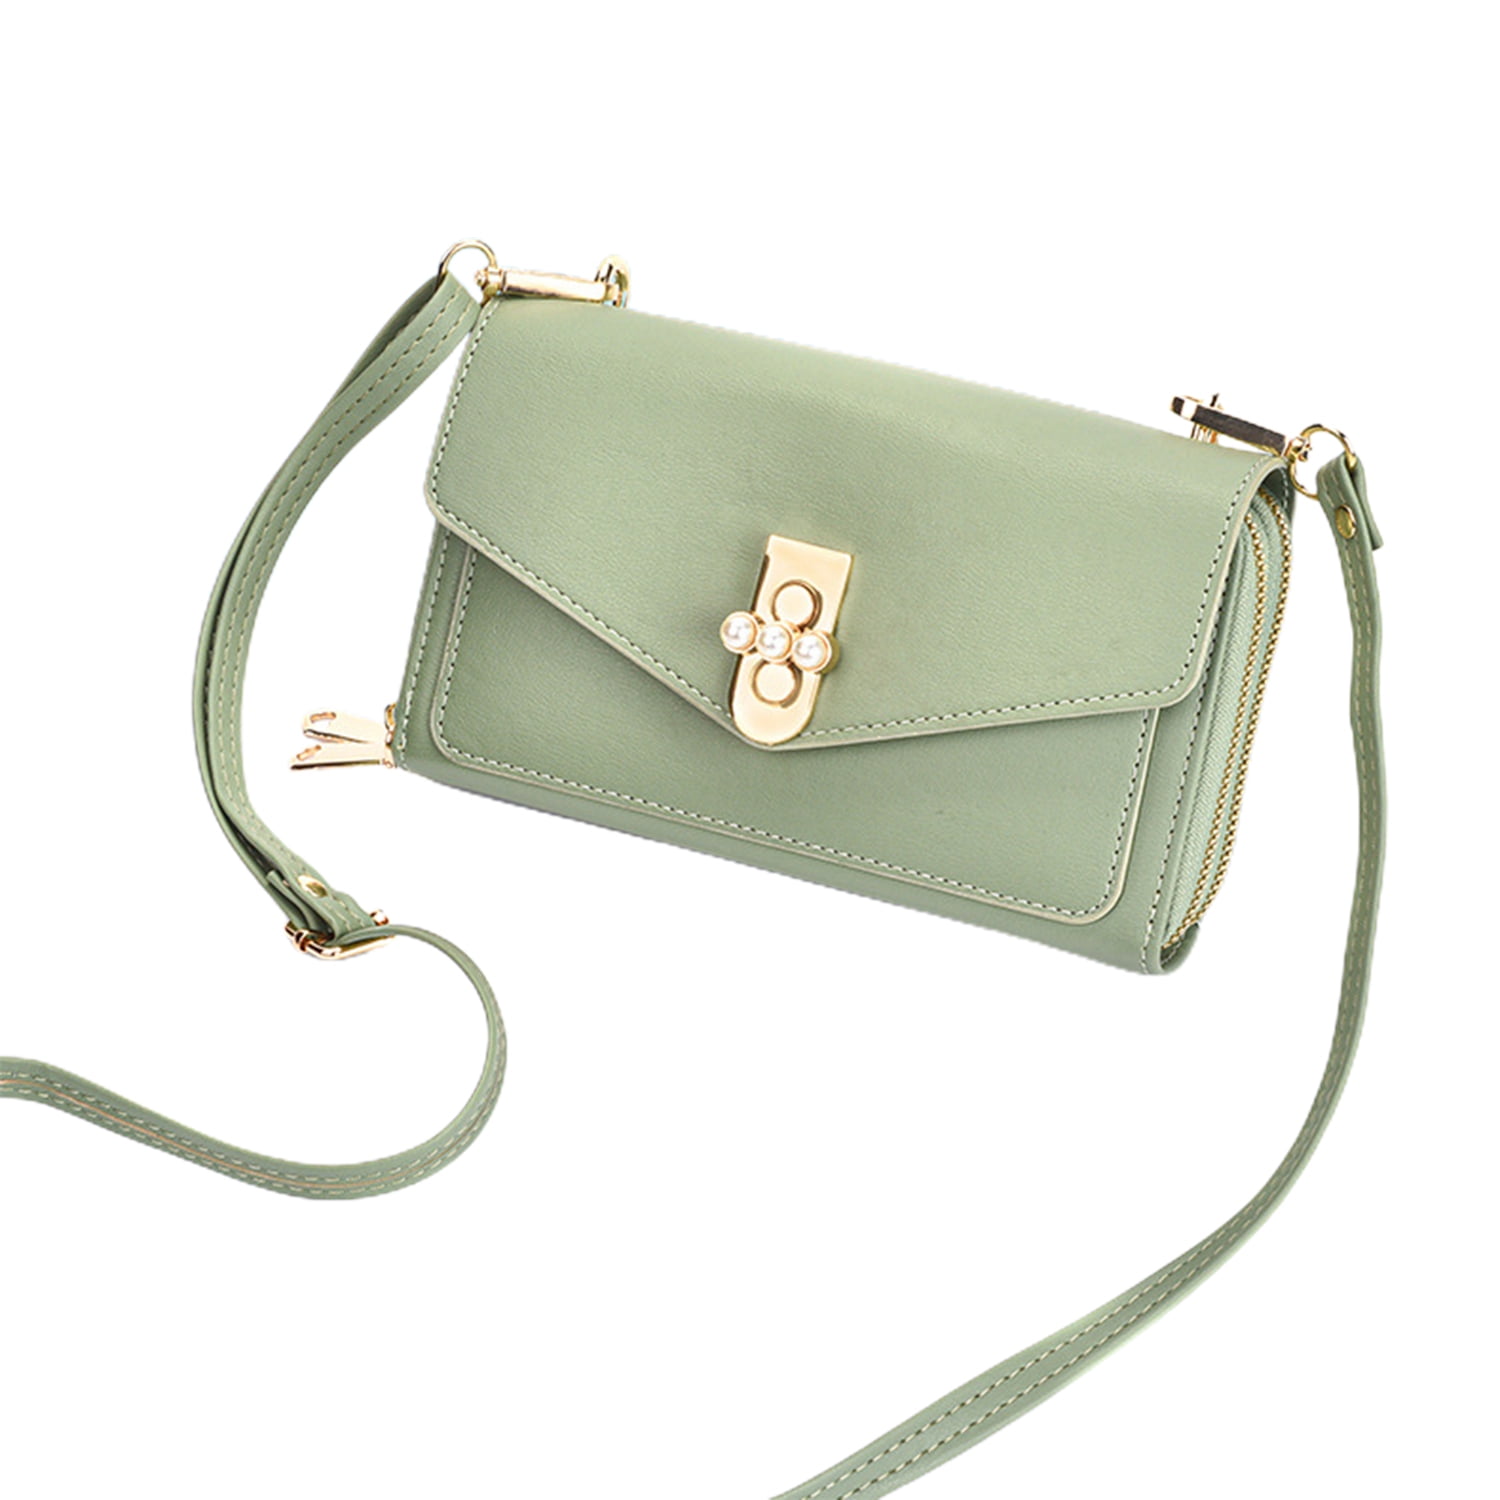 Moschino Hand Bag Purse Light Green Clutch My Little Pony Print Zip  Wristlet | eBay